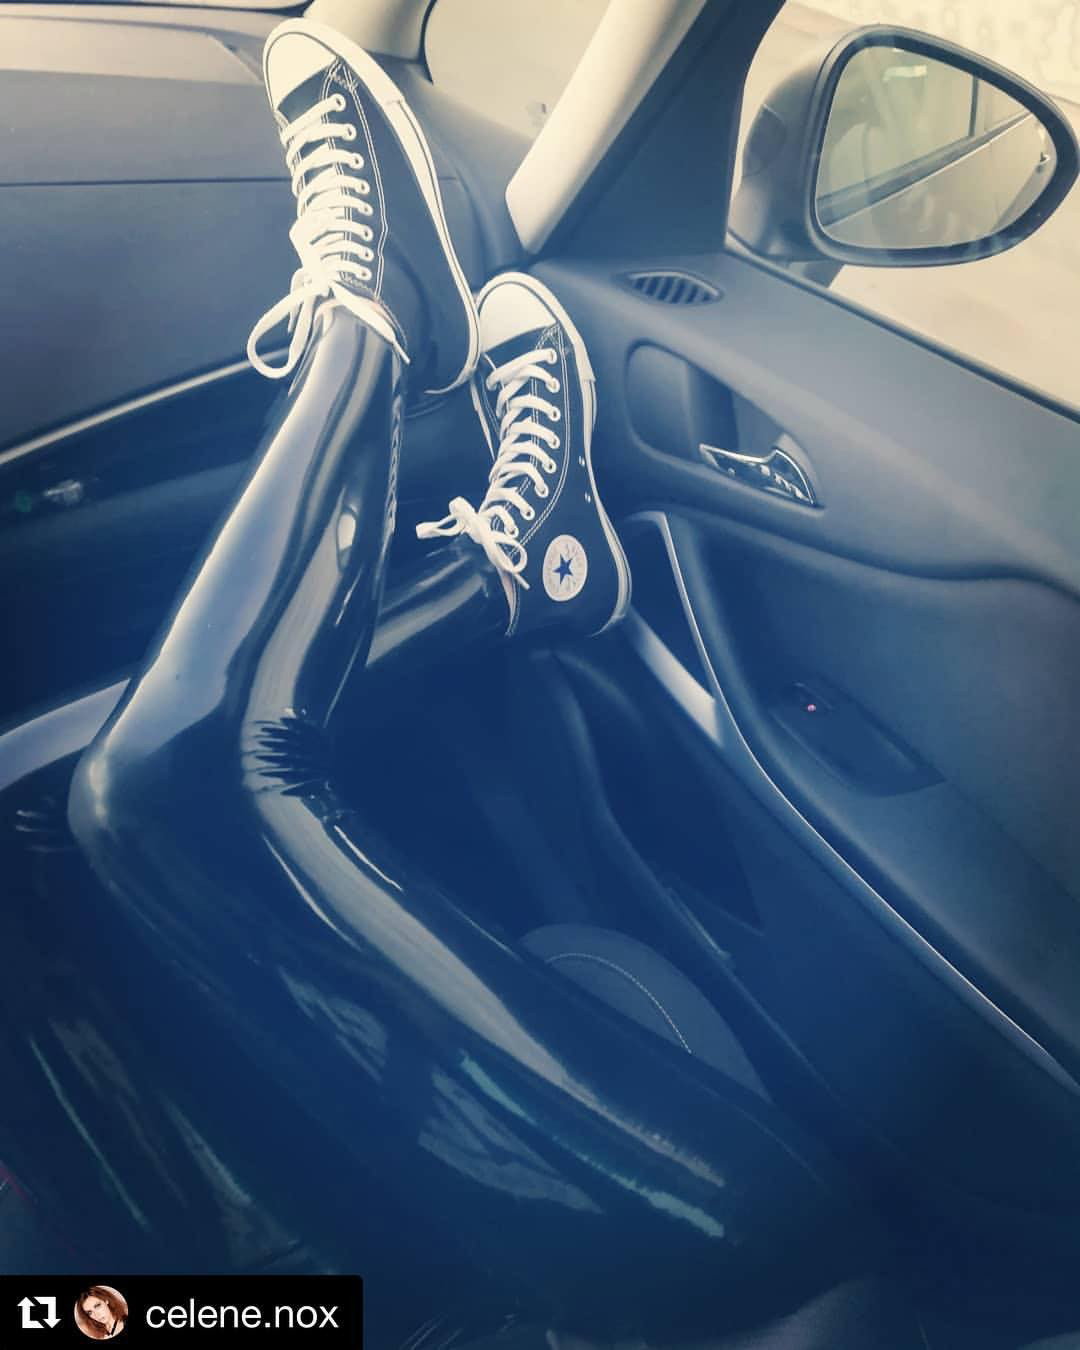 Photo by JoonasD6 with the username @JoonasD6,  October 27, 2018 at 4:37 PM and the text says 'latexfashiontv:

#Repost @celene.nox
・・・
Got new Converse  classy one  -
-
#chucks #latexleggings #converse #latex #leggings #latexhosen #legginslove #noSocks #rubber #shiny #dailylatex #fetishlife #fetishlifestyle #legslove #legs #reflection #rubbertime..'